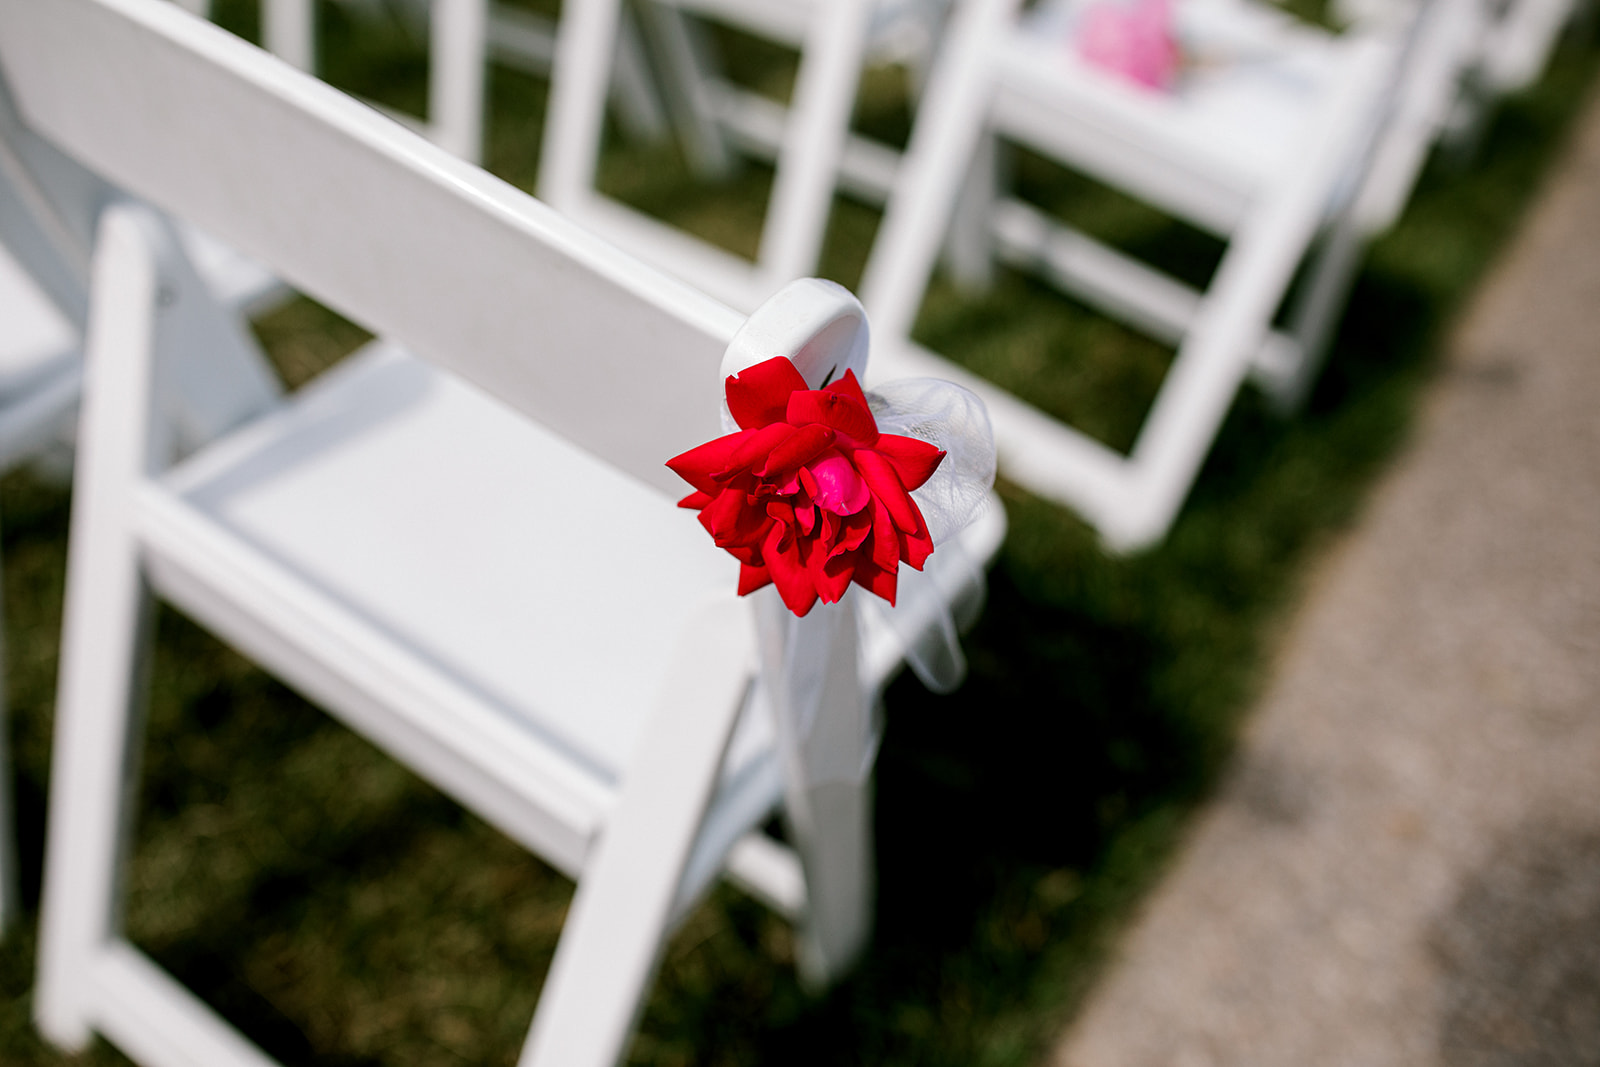 Outdoor wedding ceremony decor ideas